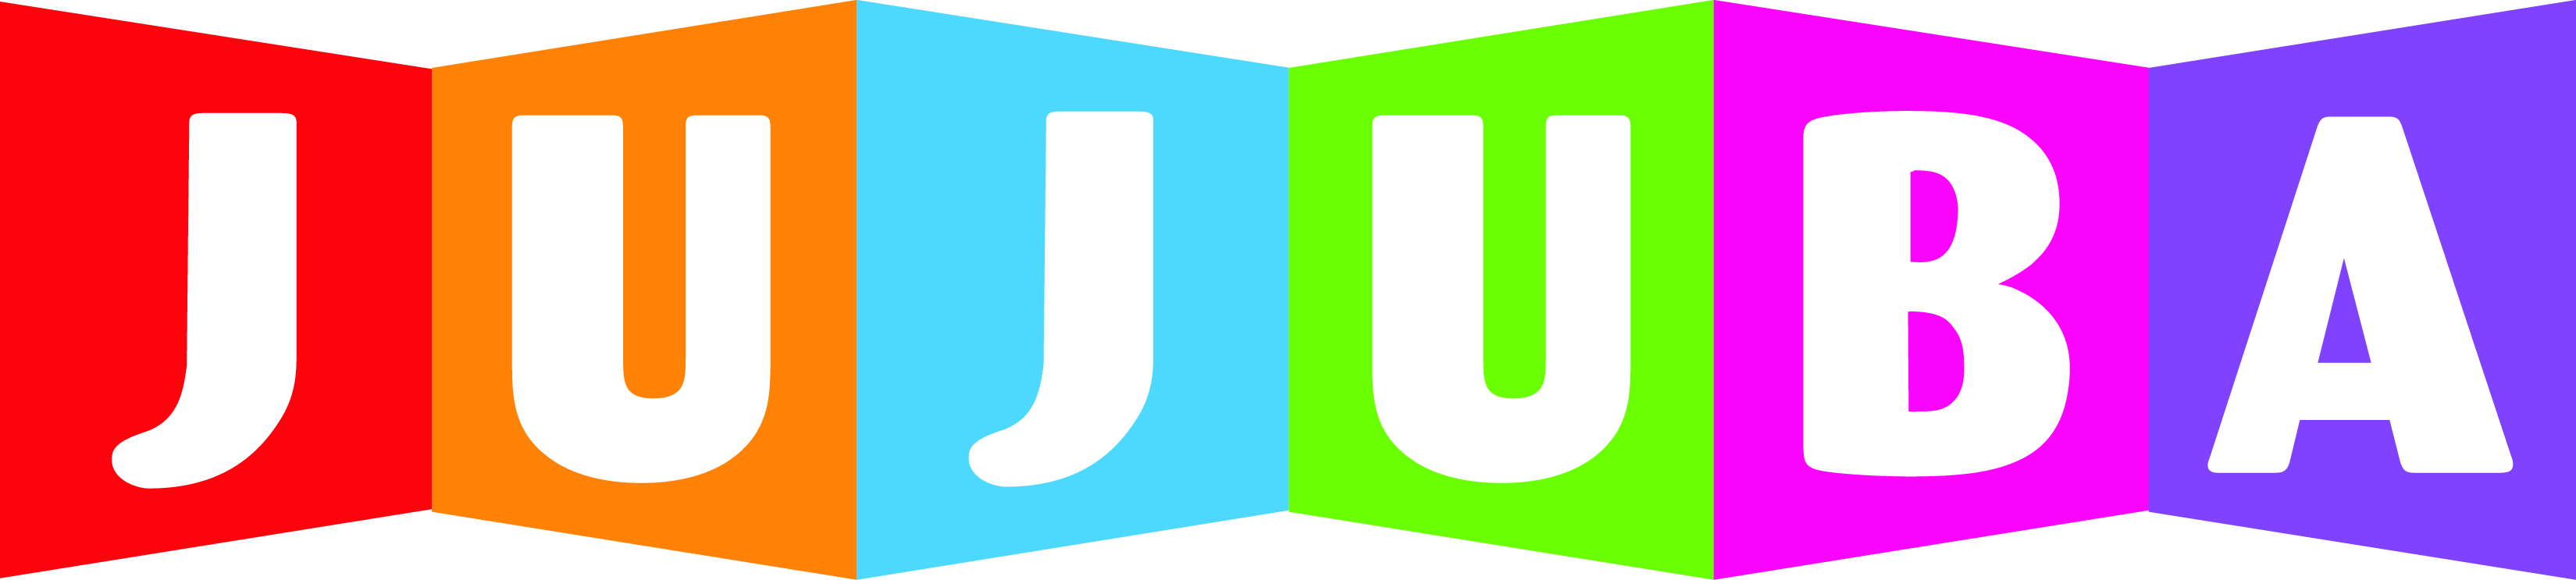 logo jujuba